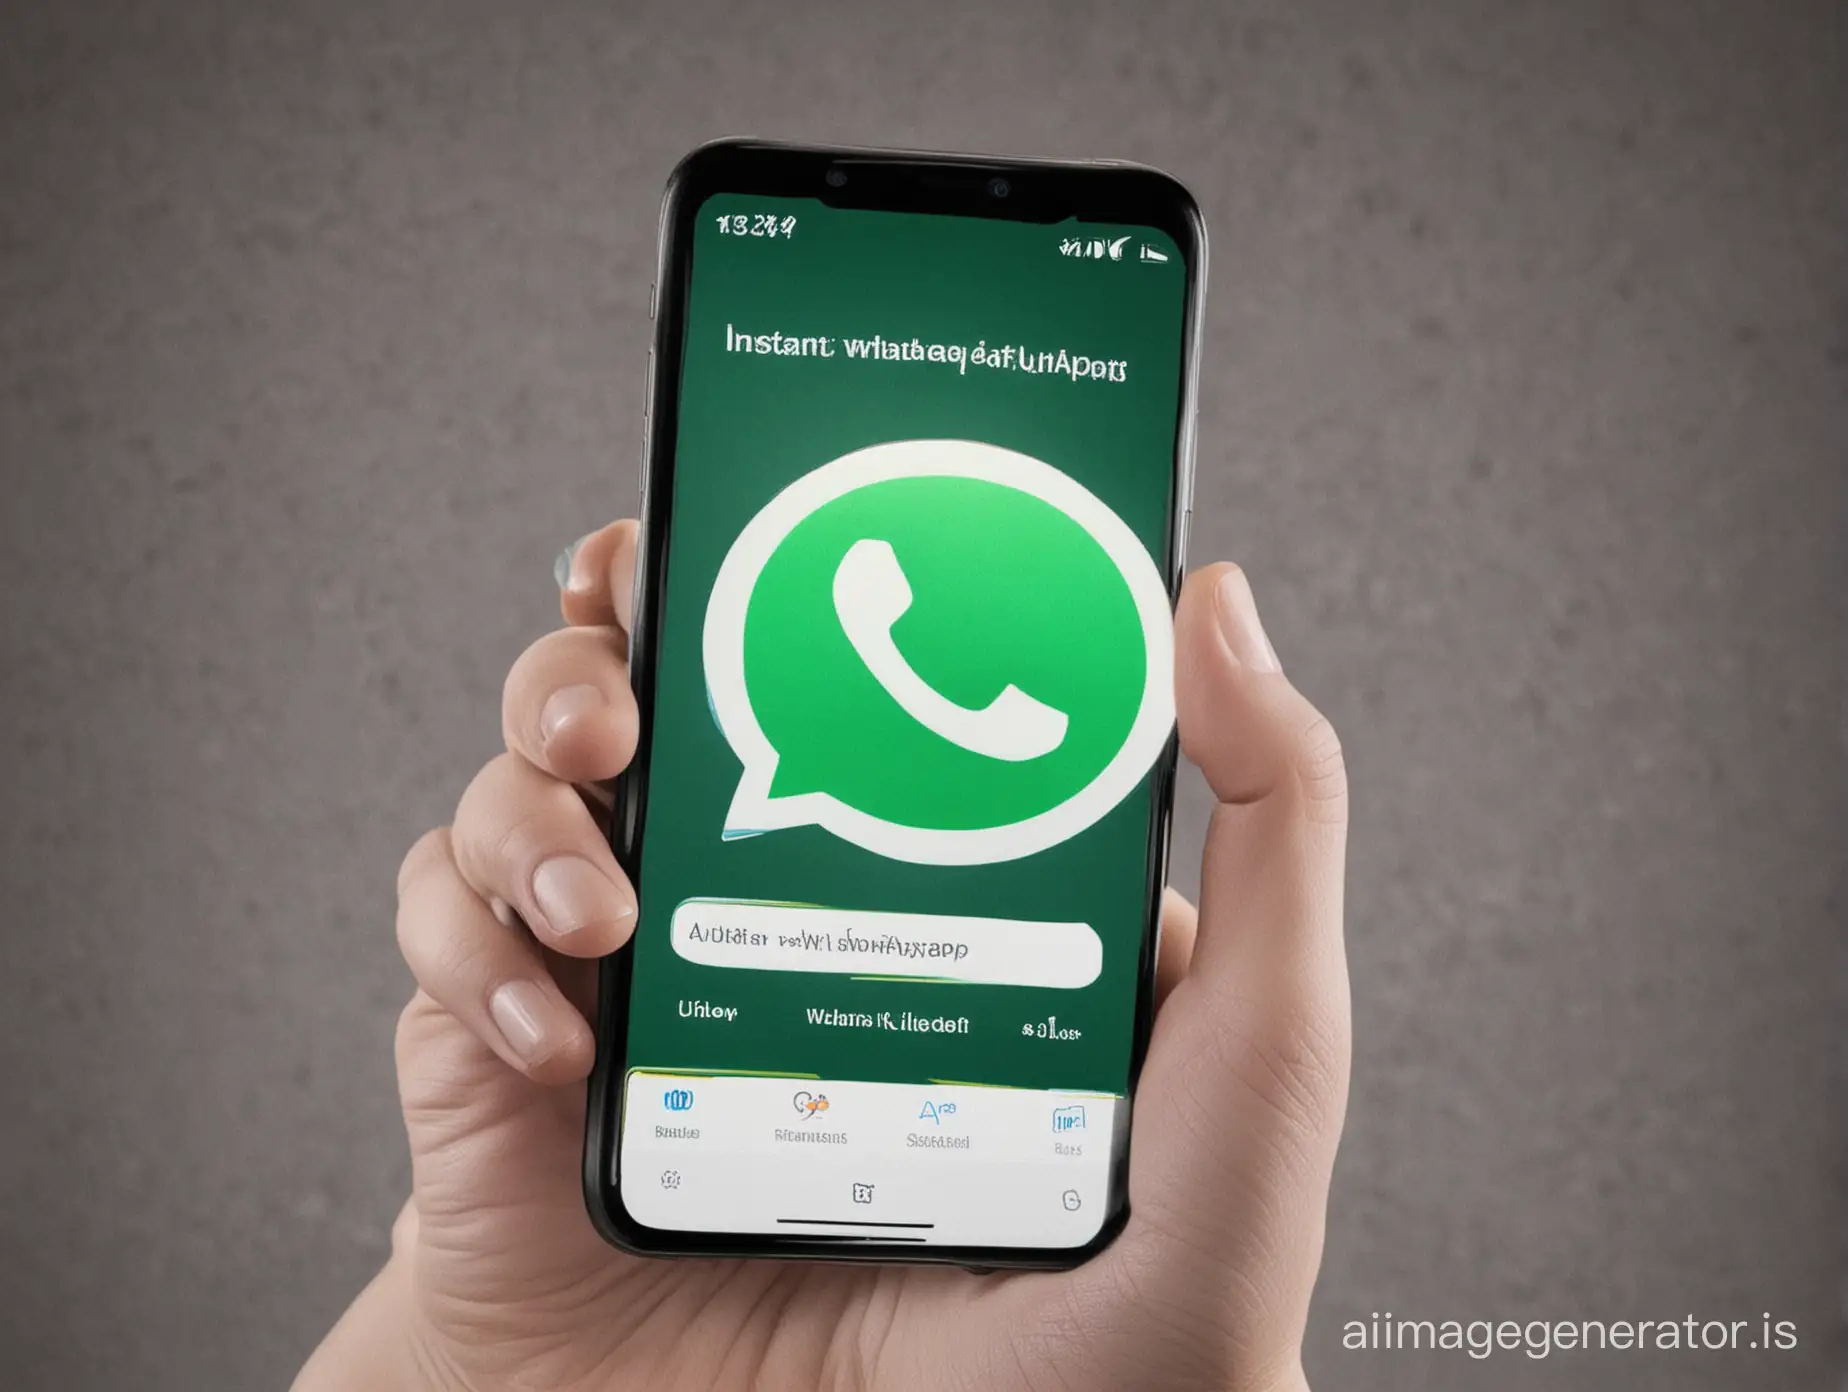 instant WhatsApp alert